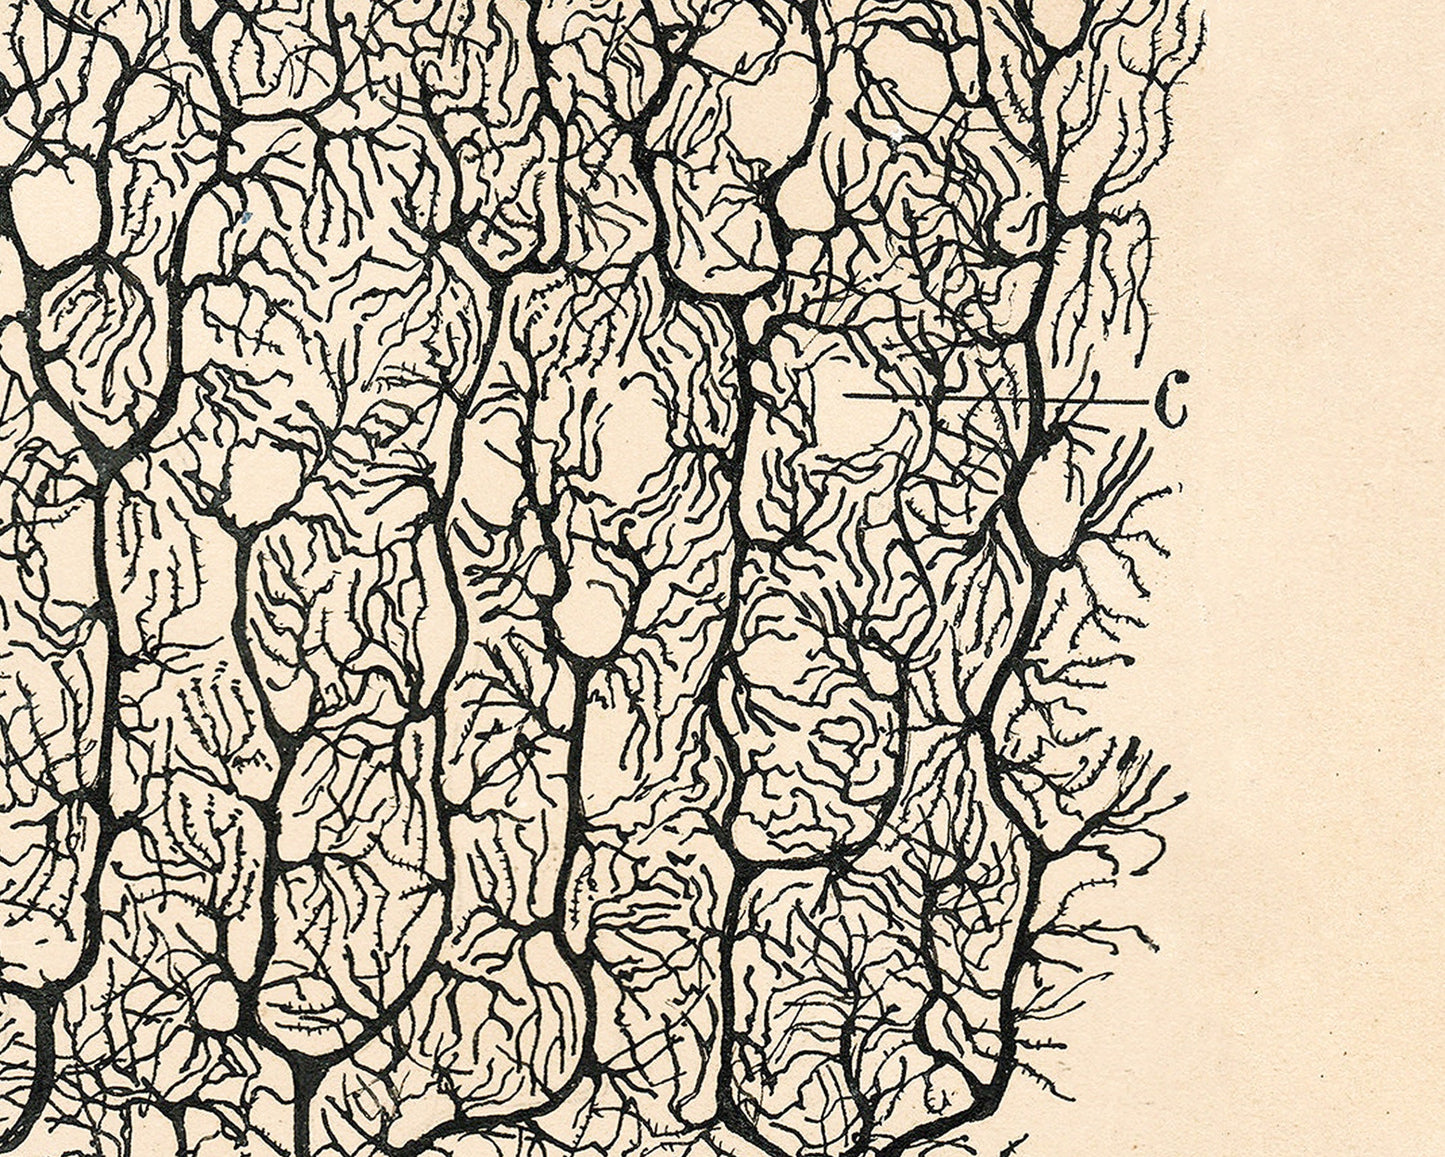 Vintage neuron drawing No. 1 | Santiago Ramón y Cajal | Antique anatomical illustration | Neuroscience & Biology | Abstract art | Spanish artist